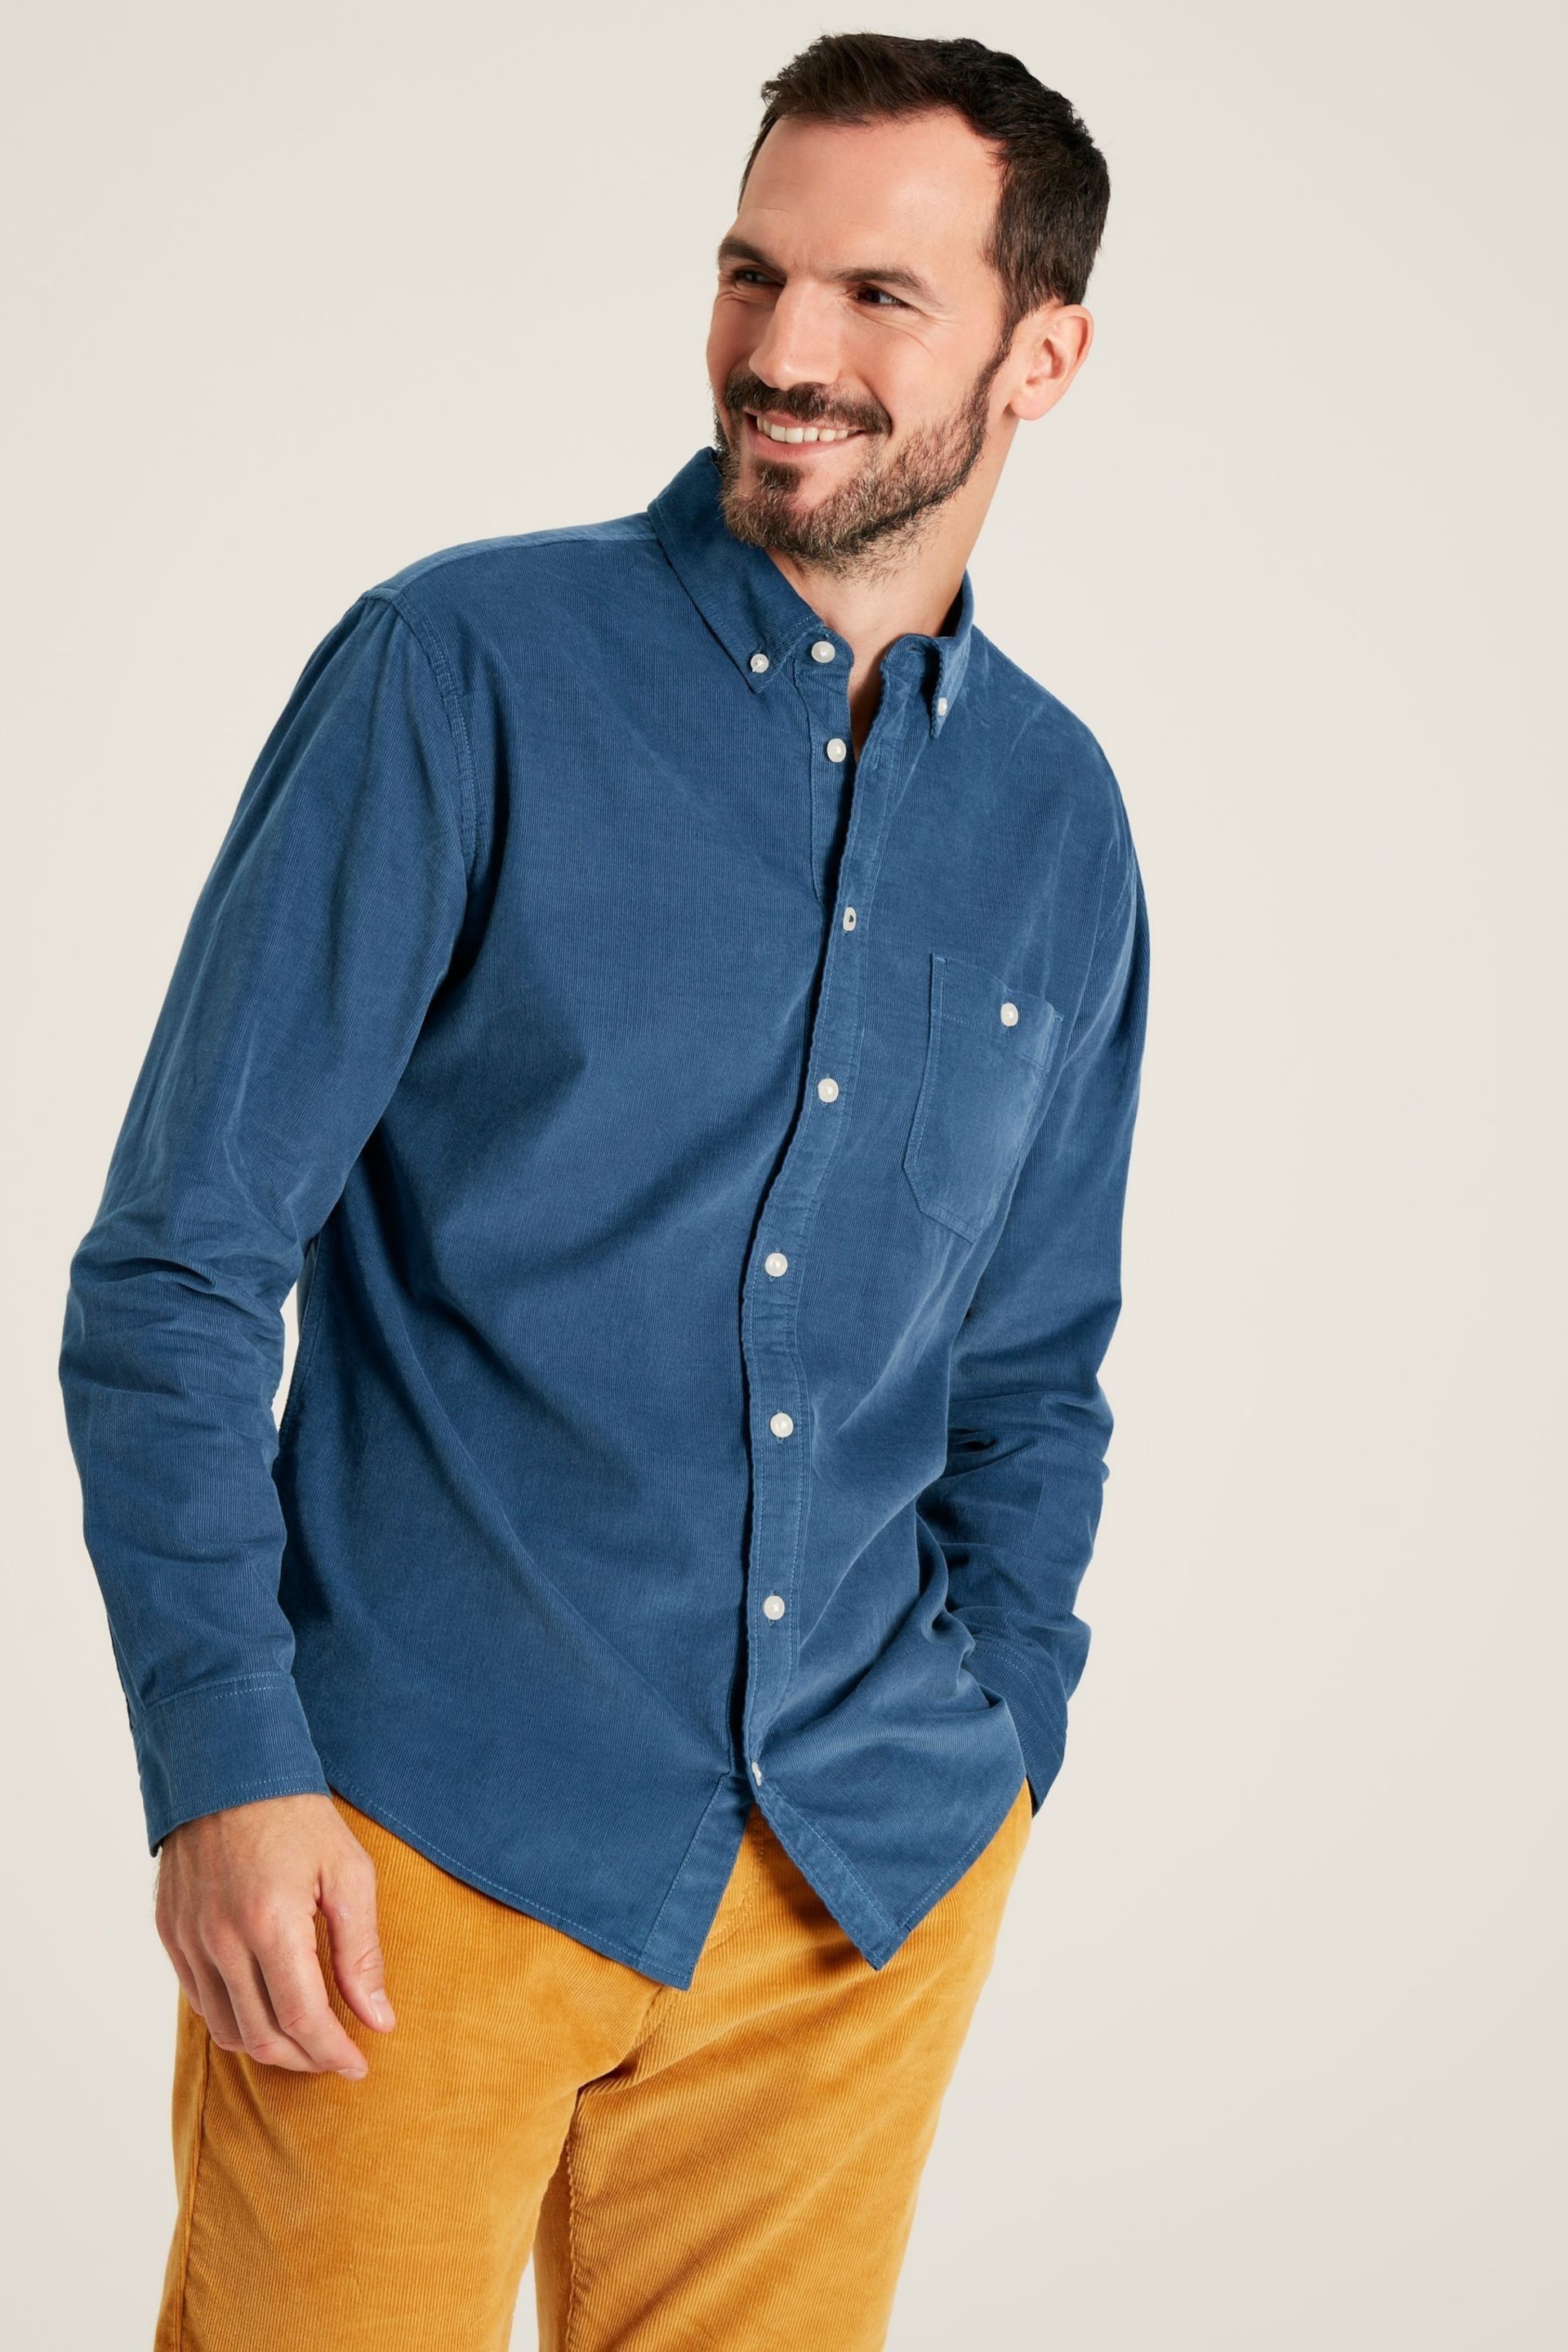 Joules Miller Blue Corduroy Shirt - Image 1 of 8